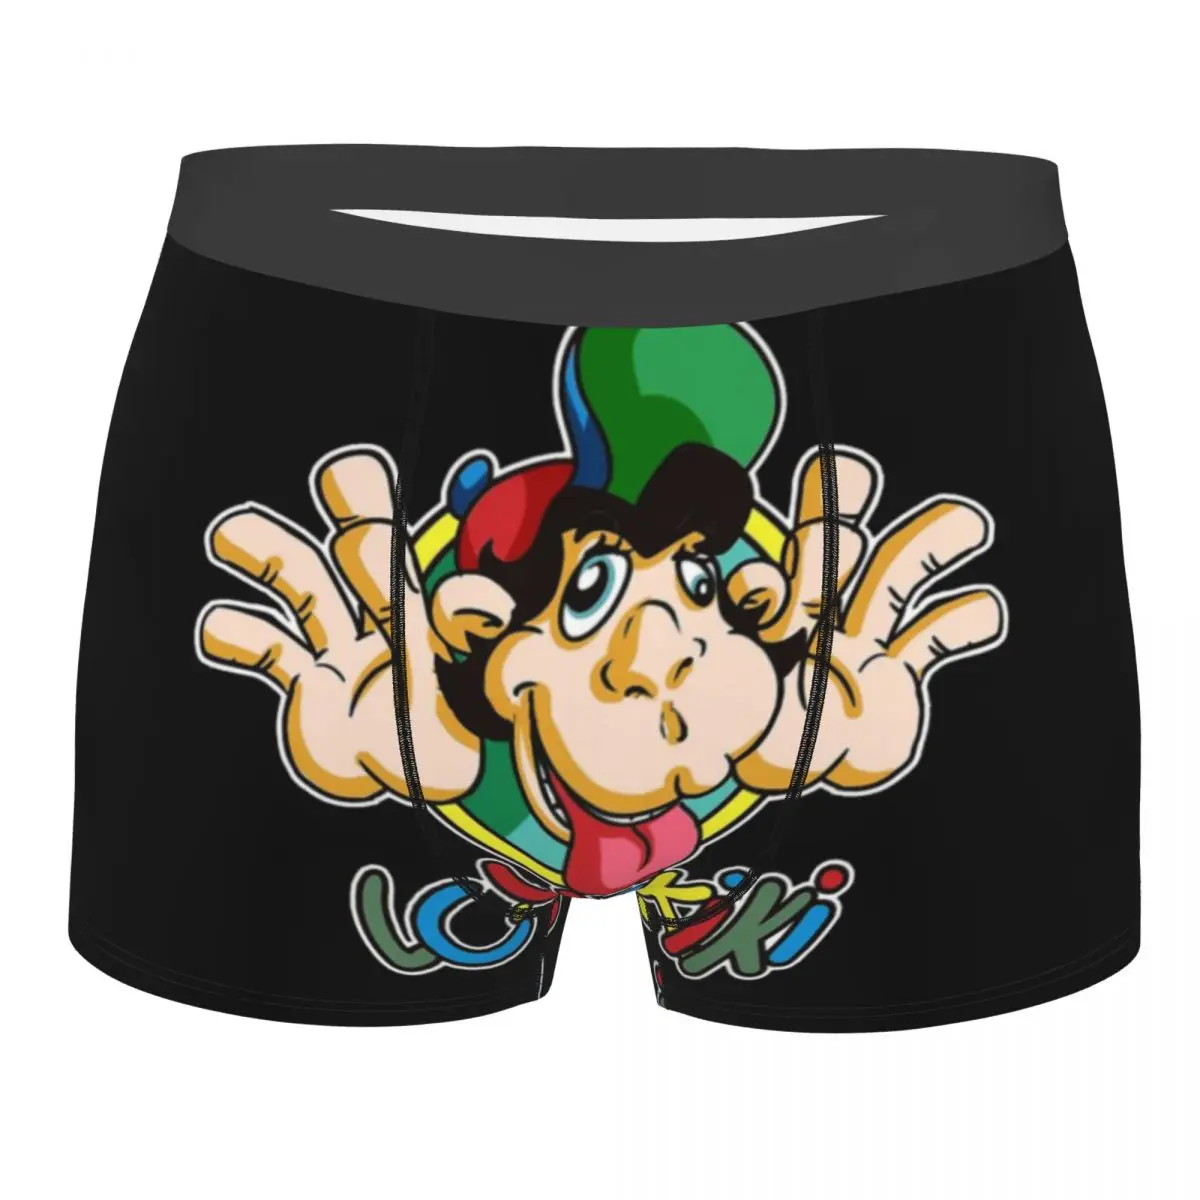 Lc Waikiki Singe Monkey Men's Boxer Briefs Highly Breathable Underwear Top Quality Print Shorts Gift Idea